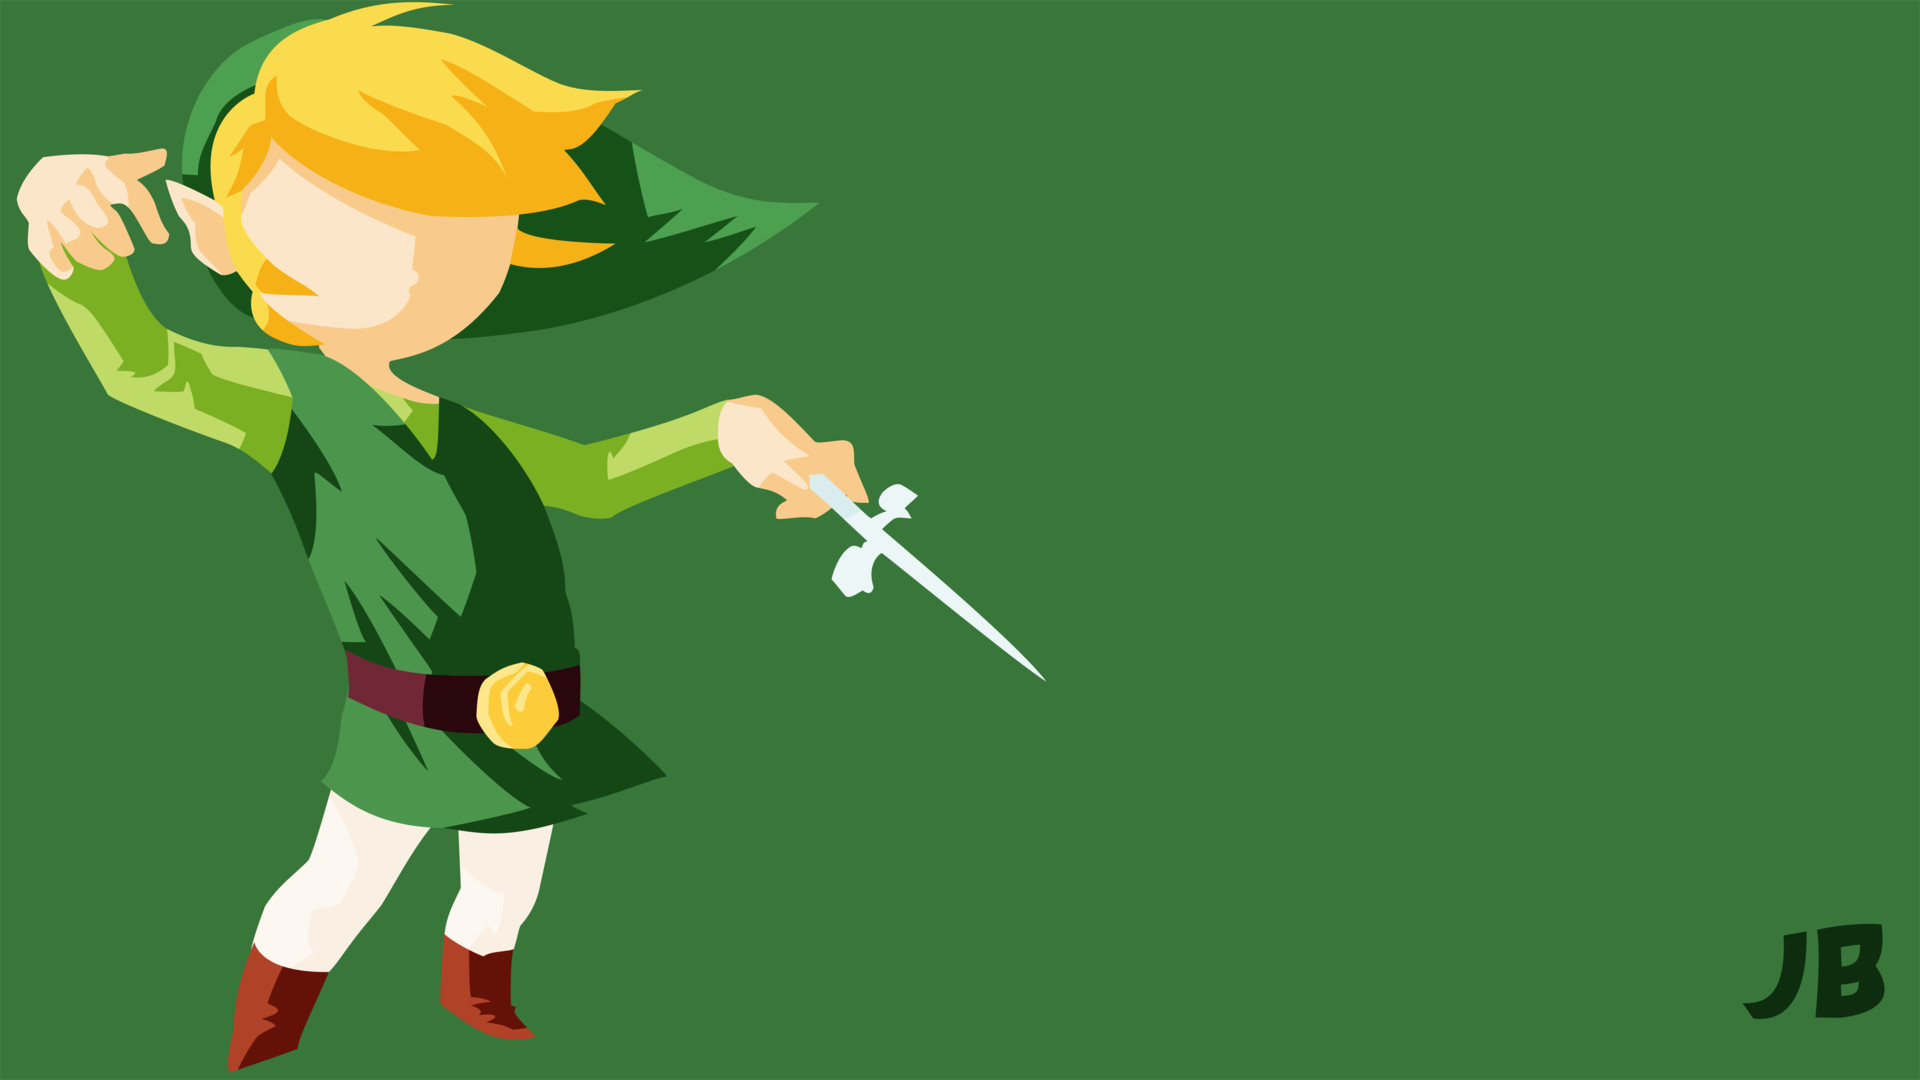 ArtStation - Link - The Legend of Zelda Wind Waker